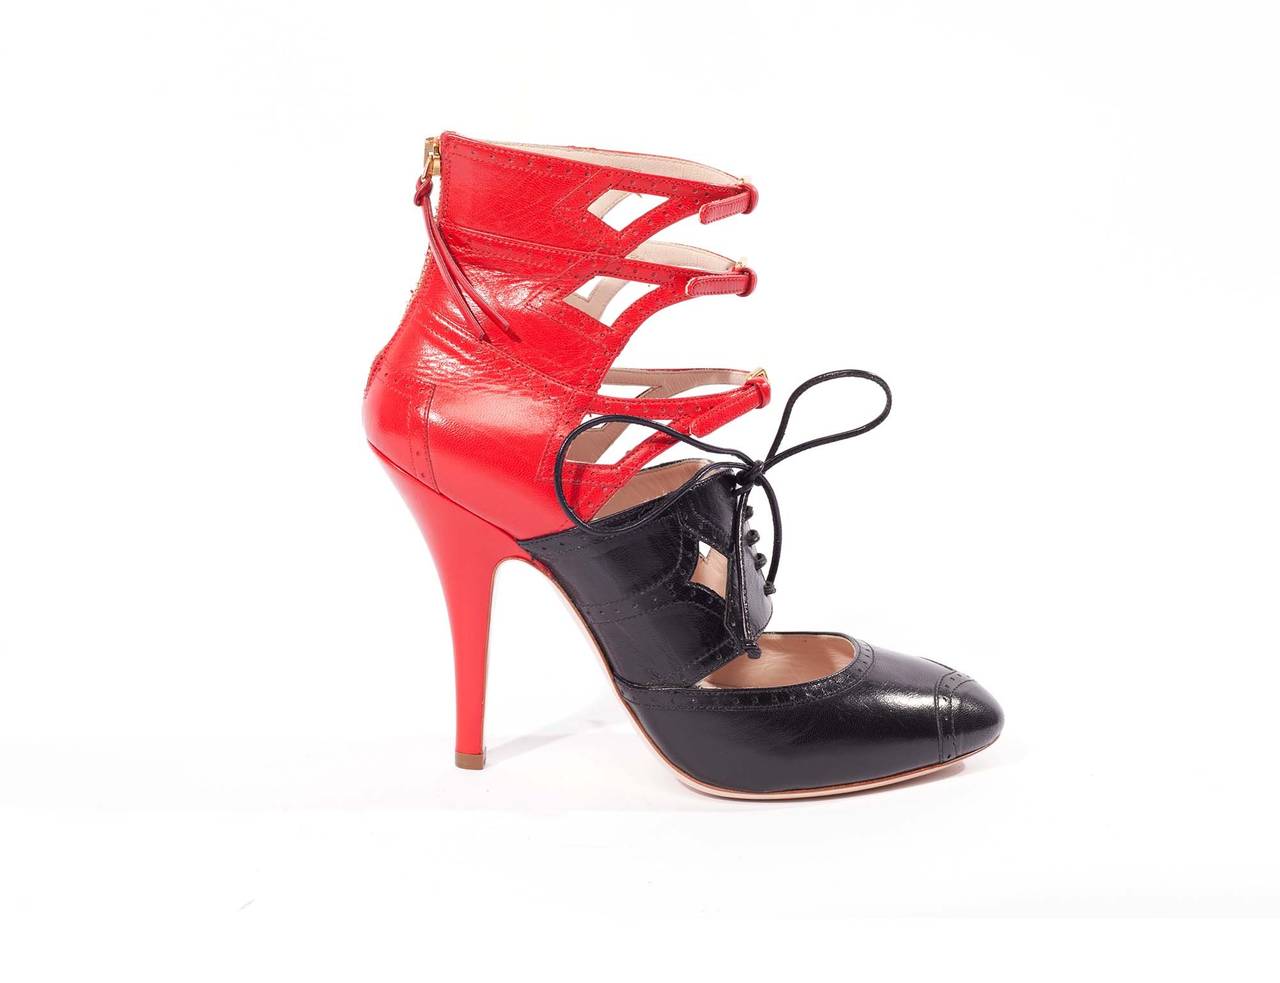 Women's Miu Miu wingtip heels with strap details